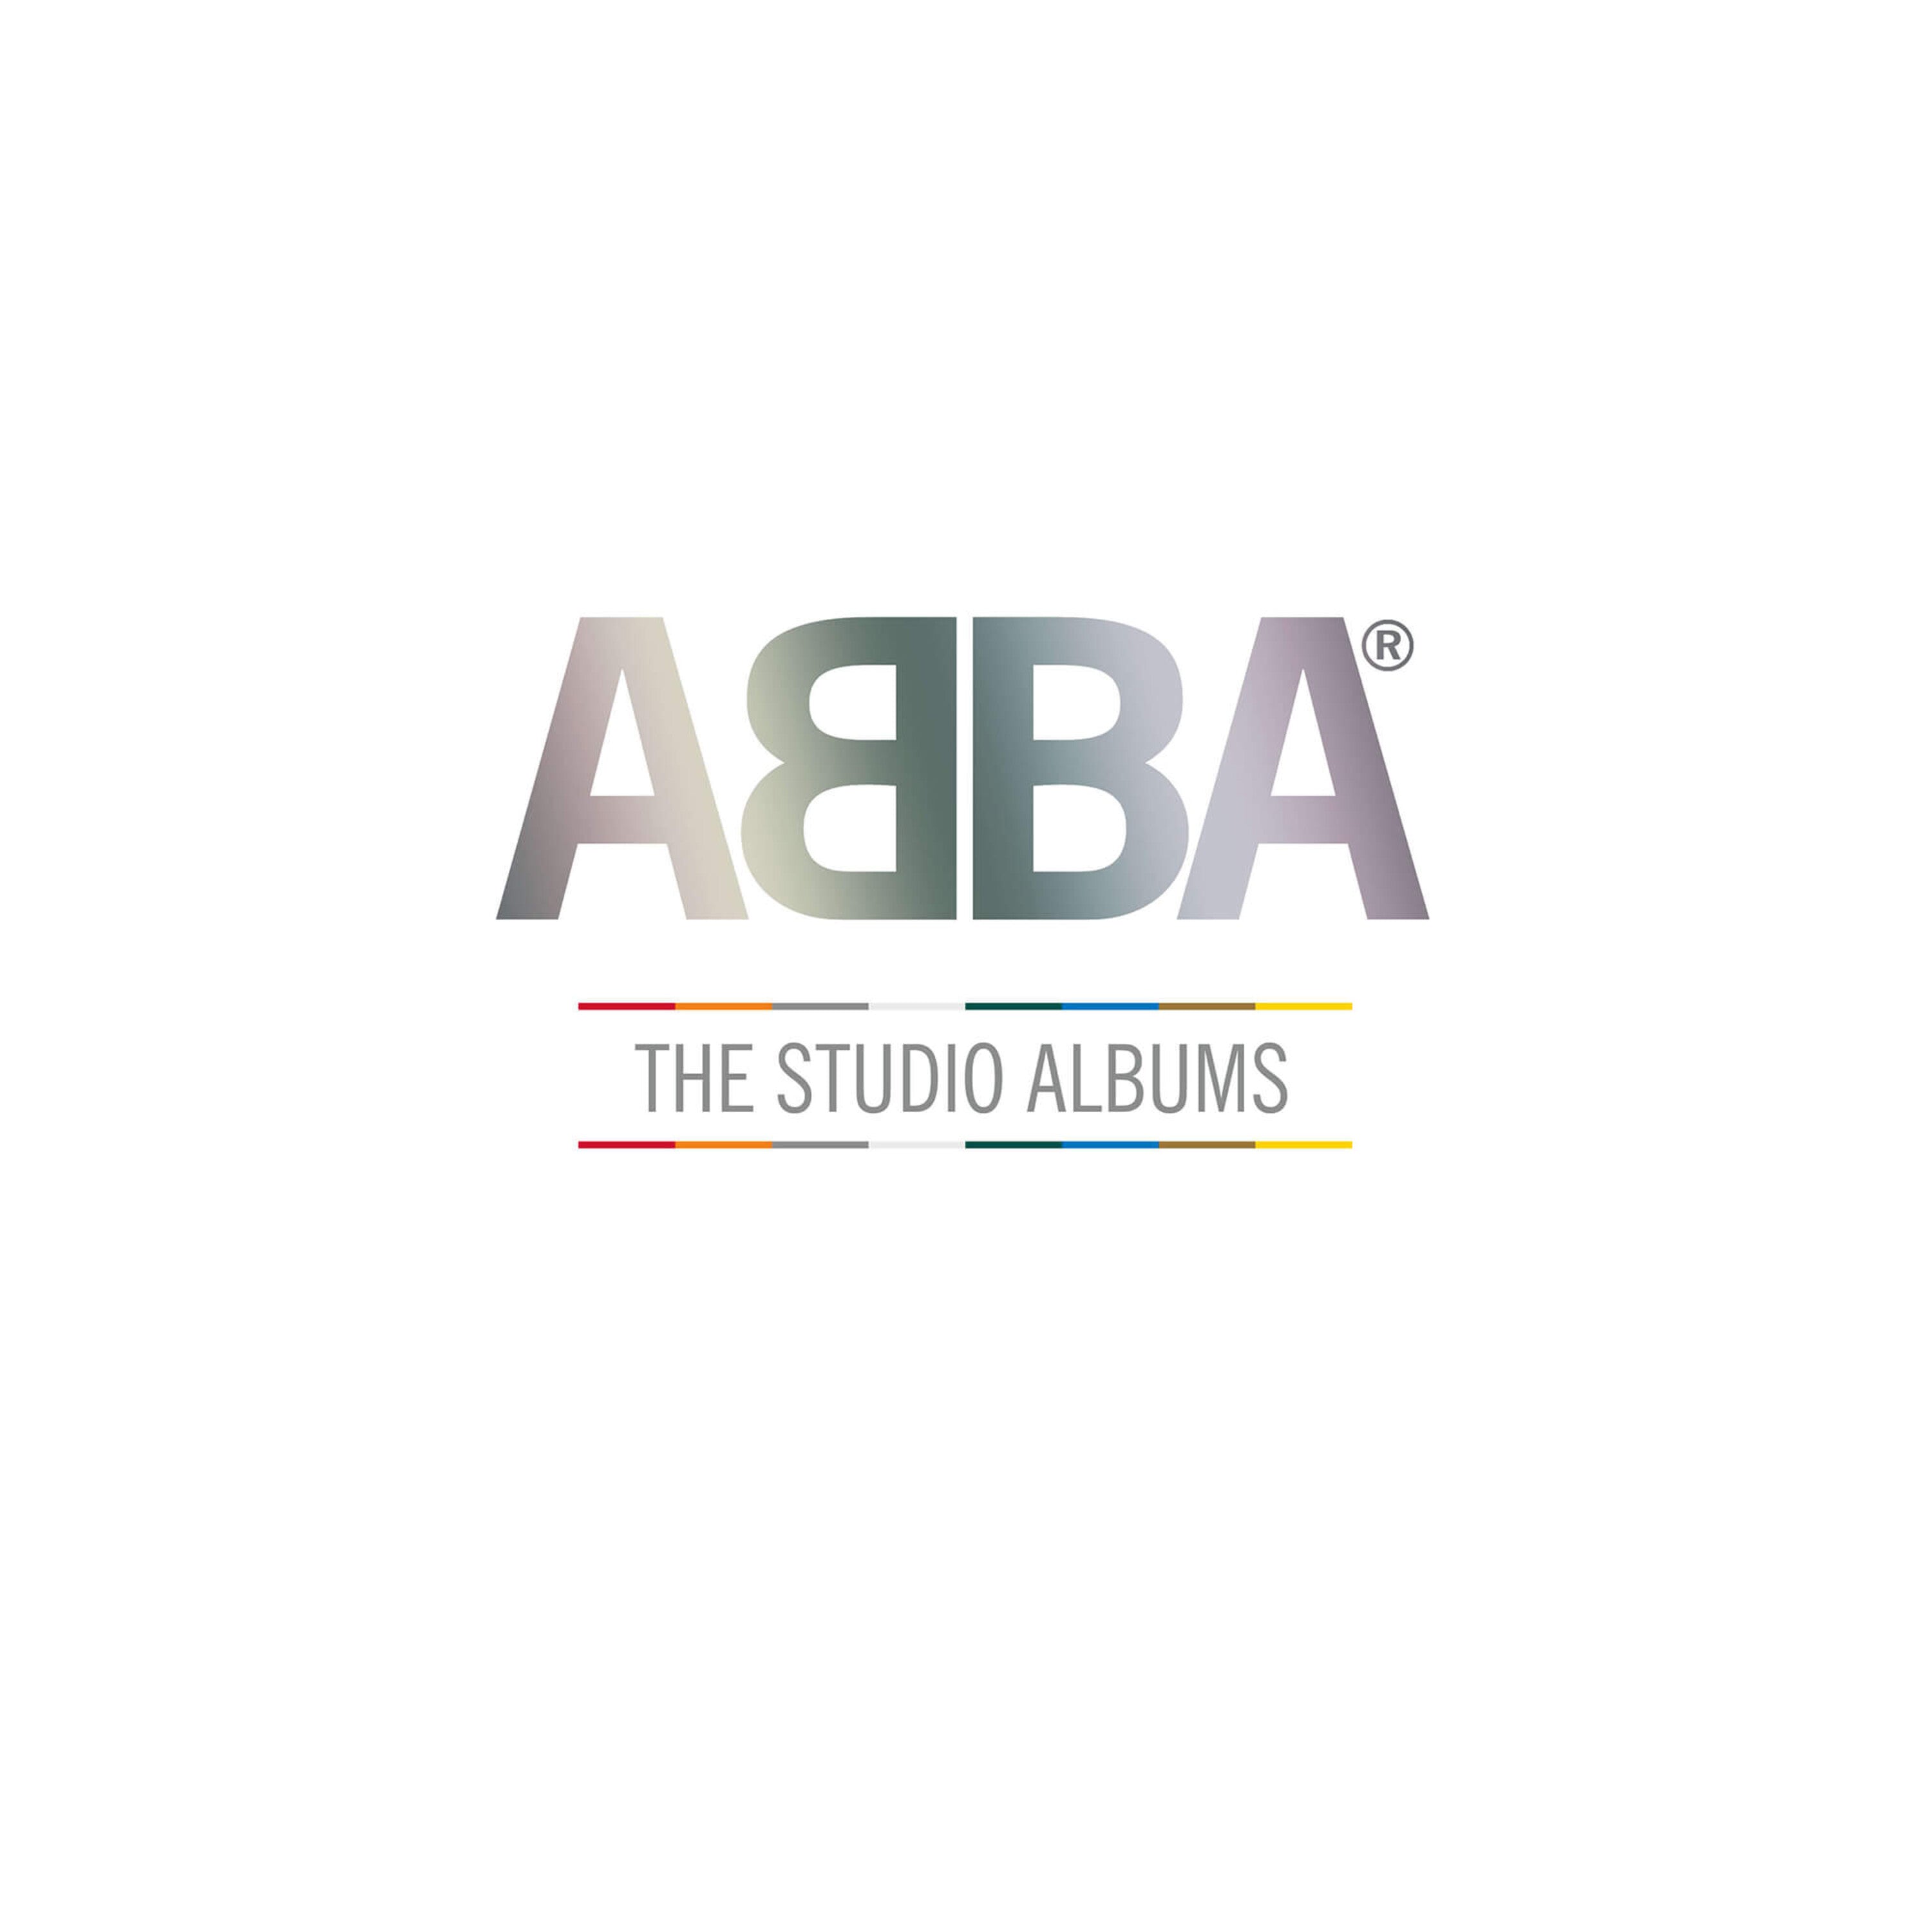 https://images.bravado.de/prod/product-assets/product-asset-data/abba/abba/products/132985/web/295331/image-thumb__295331__3000x3000_original/ABBA-The-Studio-Albums-8LP-Coloured-Vinyl-Box-Boxsets-132985-295331.jpg